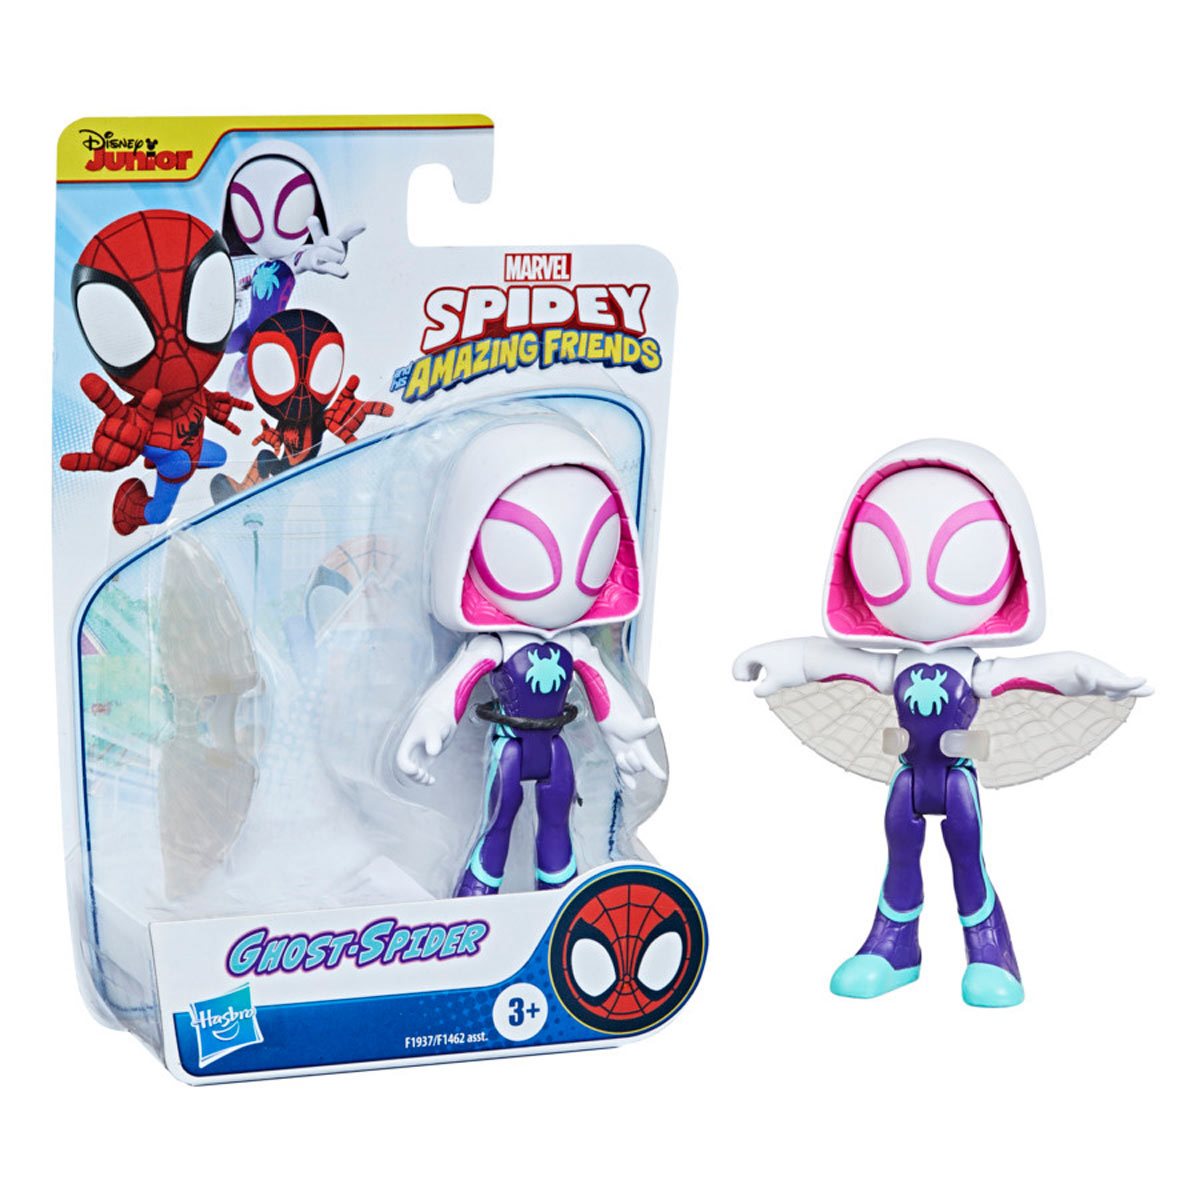 Spider-Man Spidey and His Amazing Friends Ghost-Spider Hero Figure